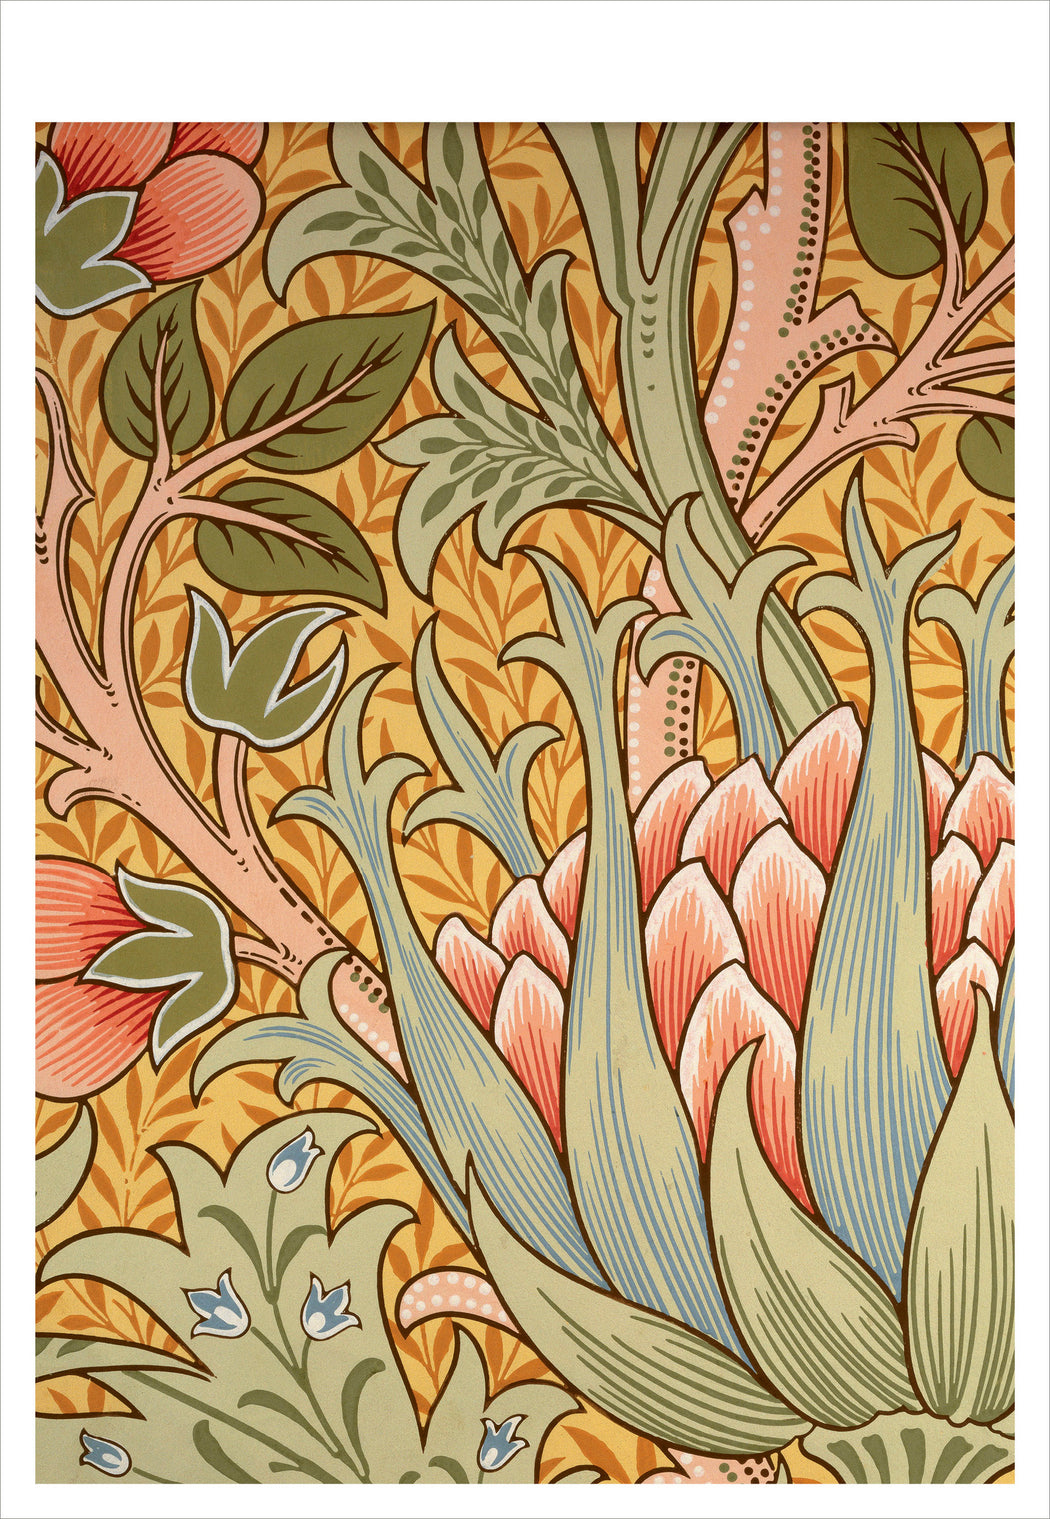 William Morris: Arts and Crafts Designs Book of Postcards — Pomegranate